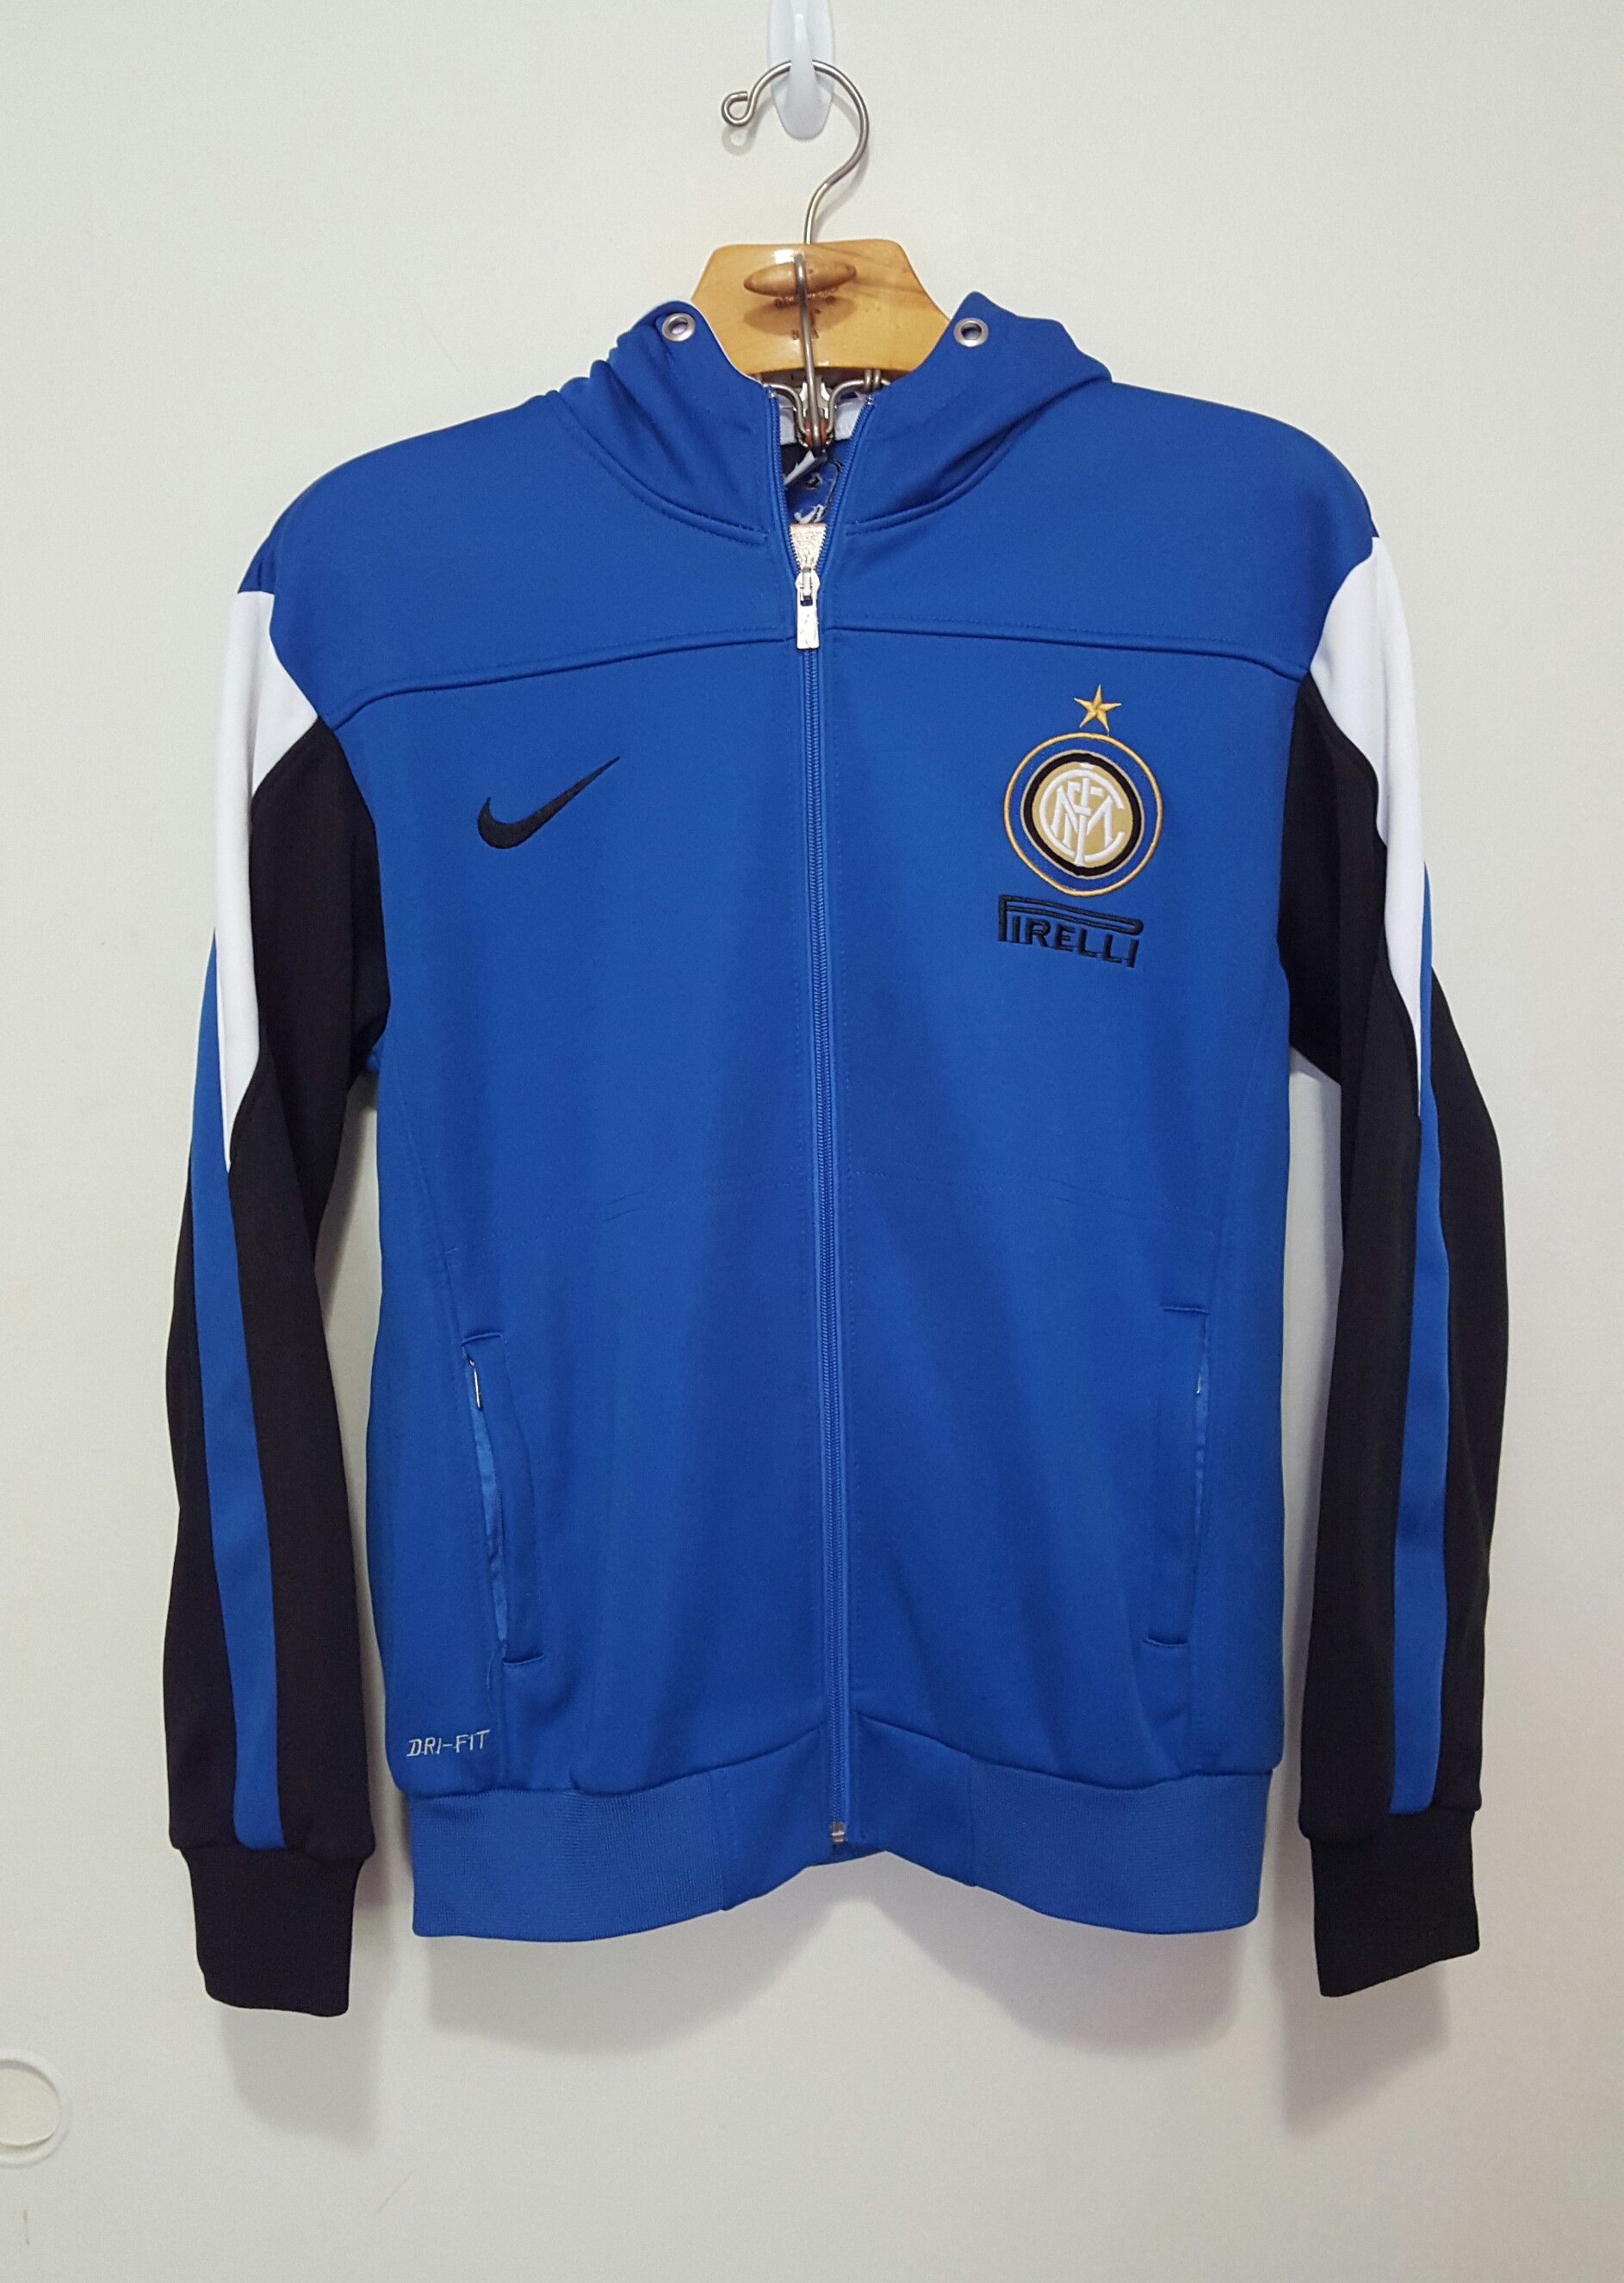 Nike Nike Inter Milan Football Club Pirelli Soccer Hoodie Size US S / EU 44-46 / 1 - 1 Preview